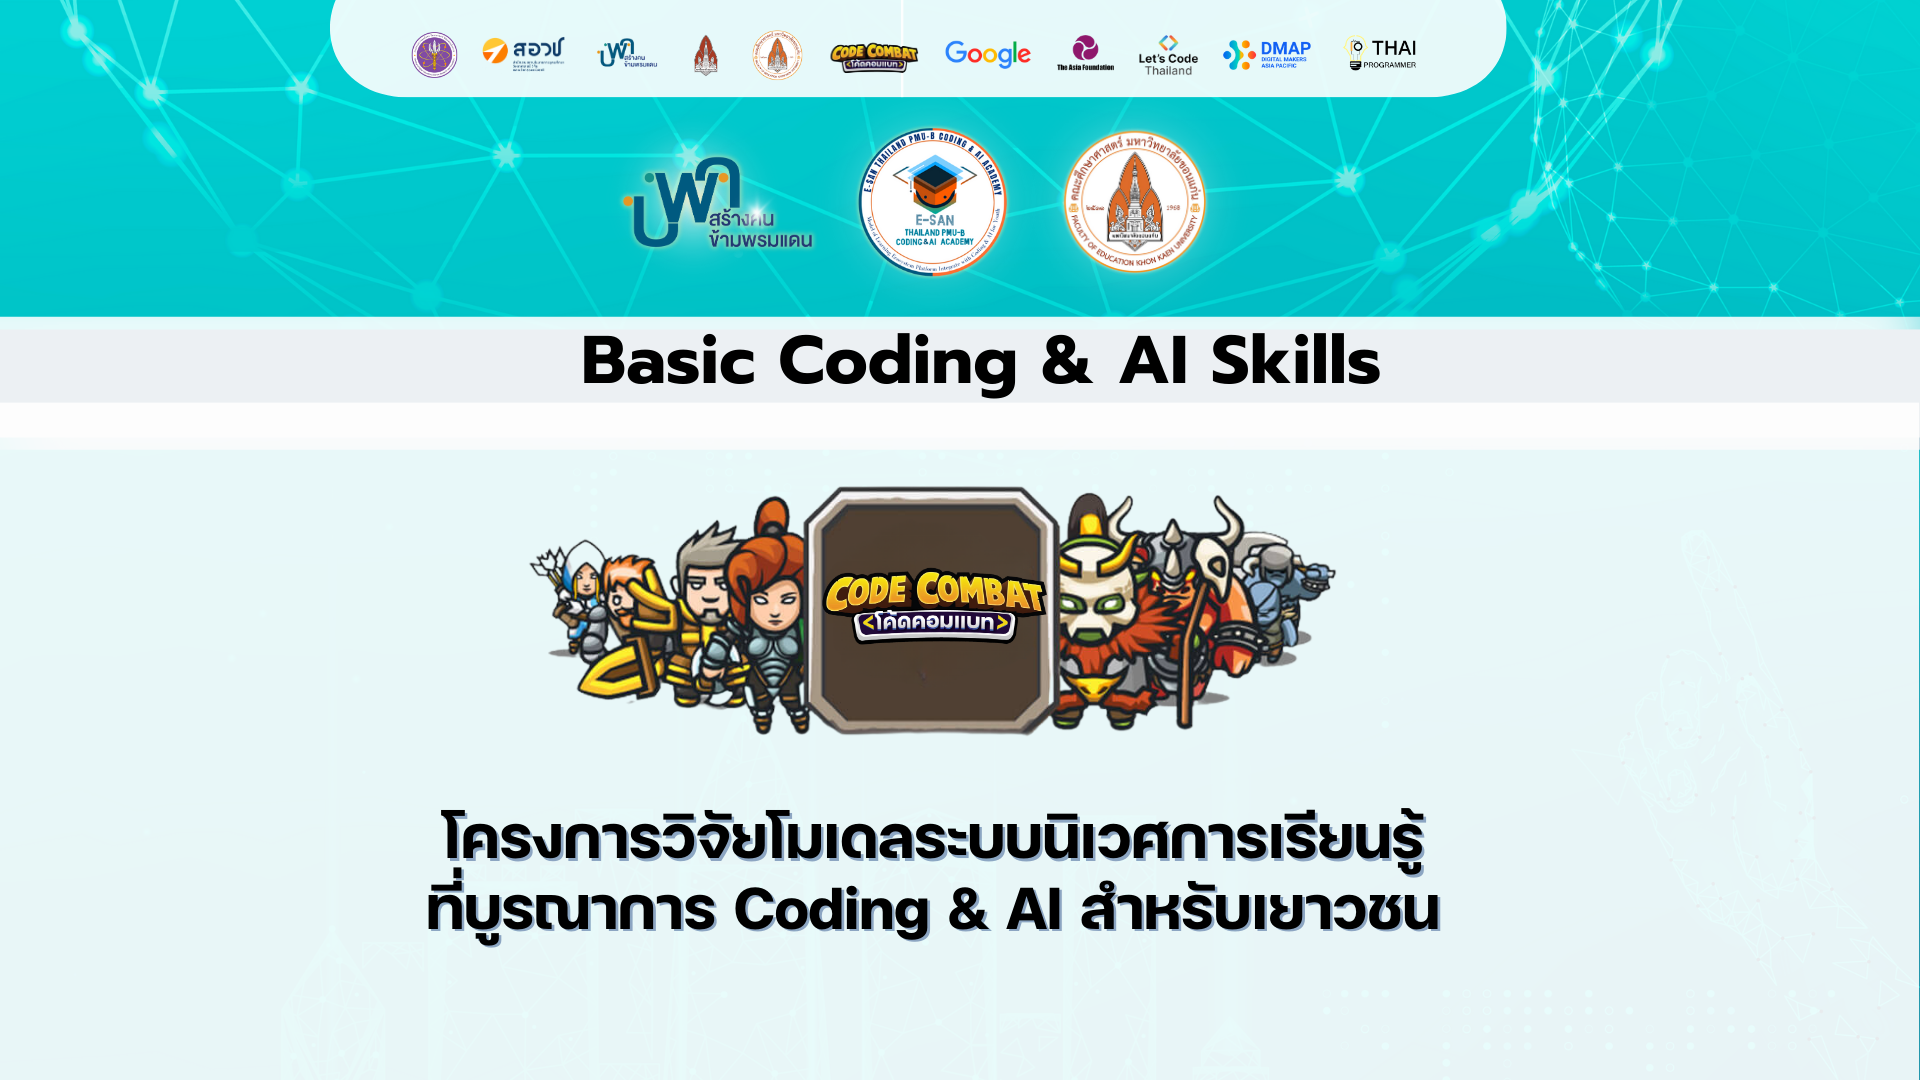 Basic Coding & AI : Code Combat